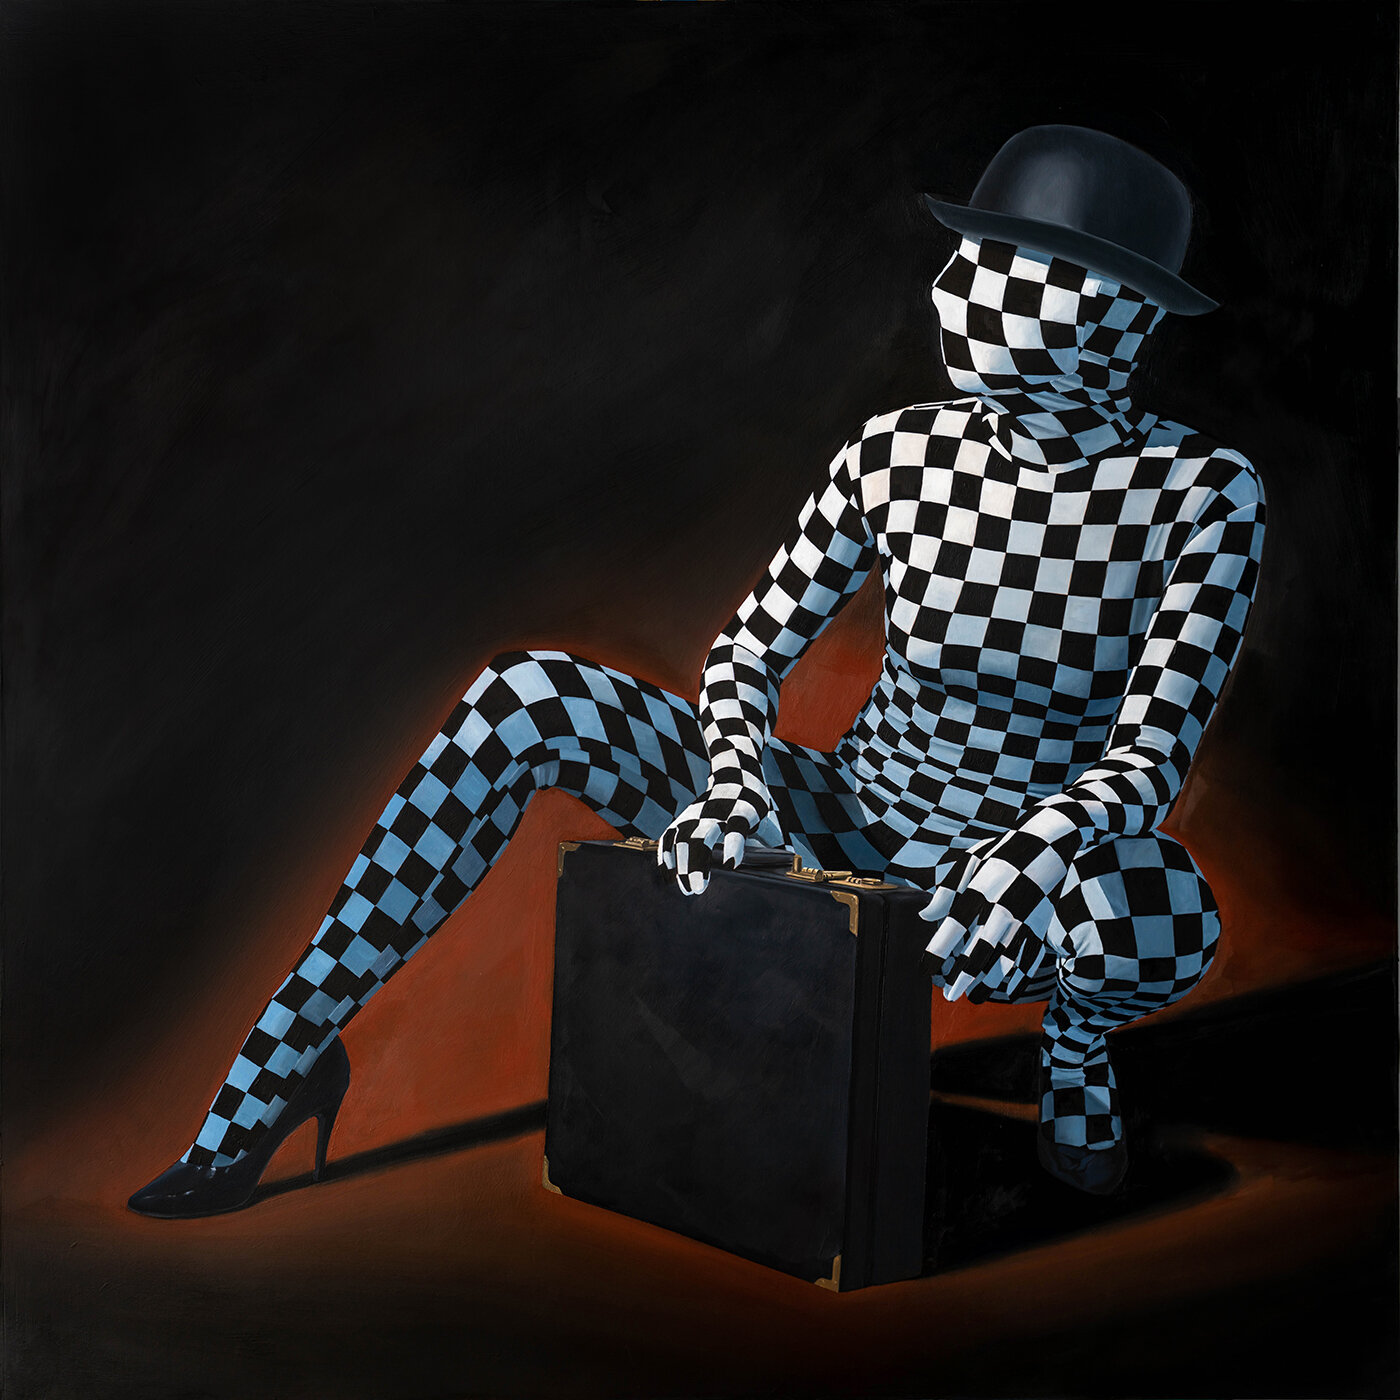 William higginson surrealism oil painting checker girl 2.jpg